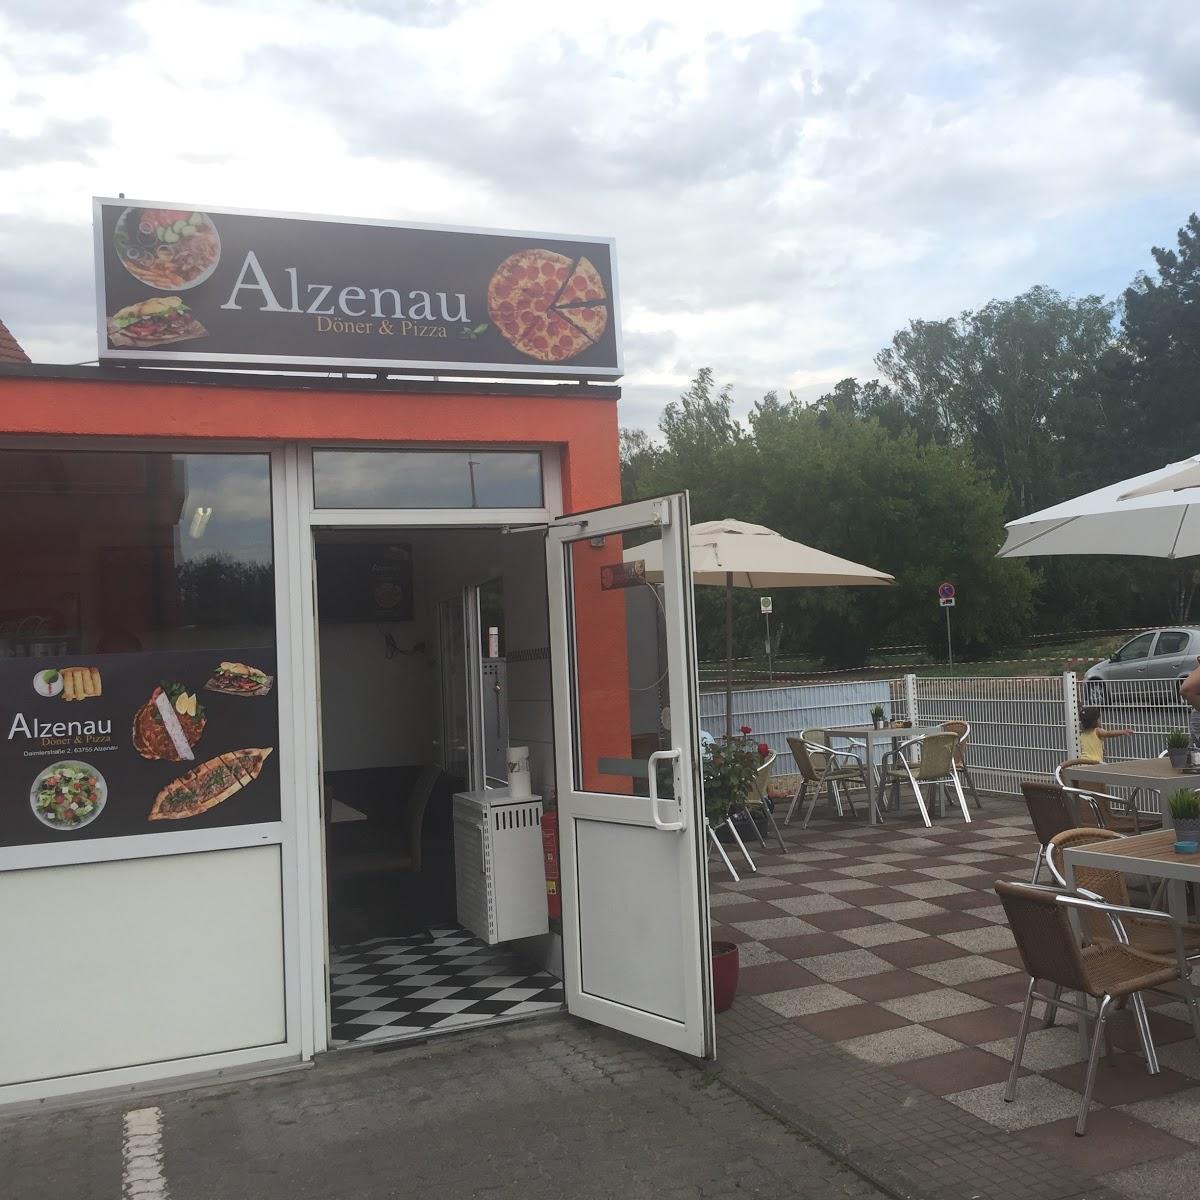 Restaurant "Döner & Pizza" in Alzenau